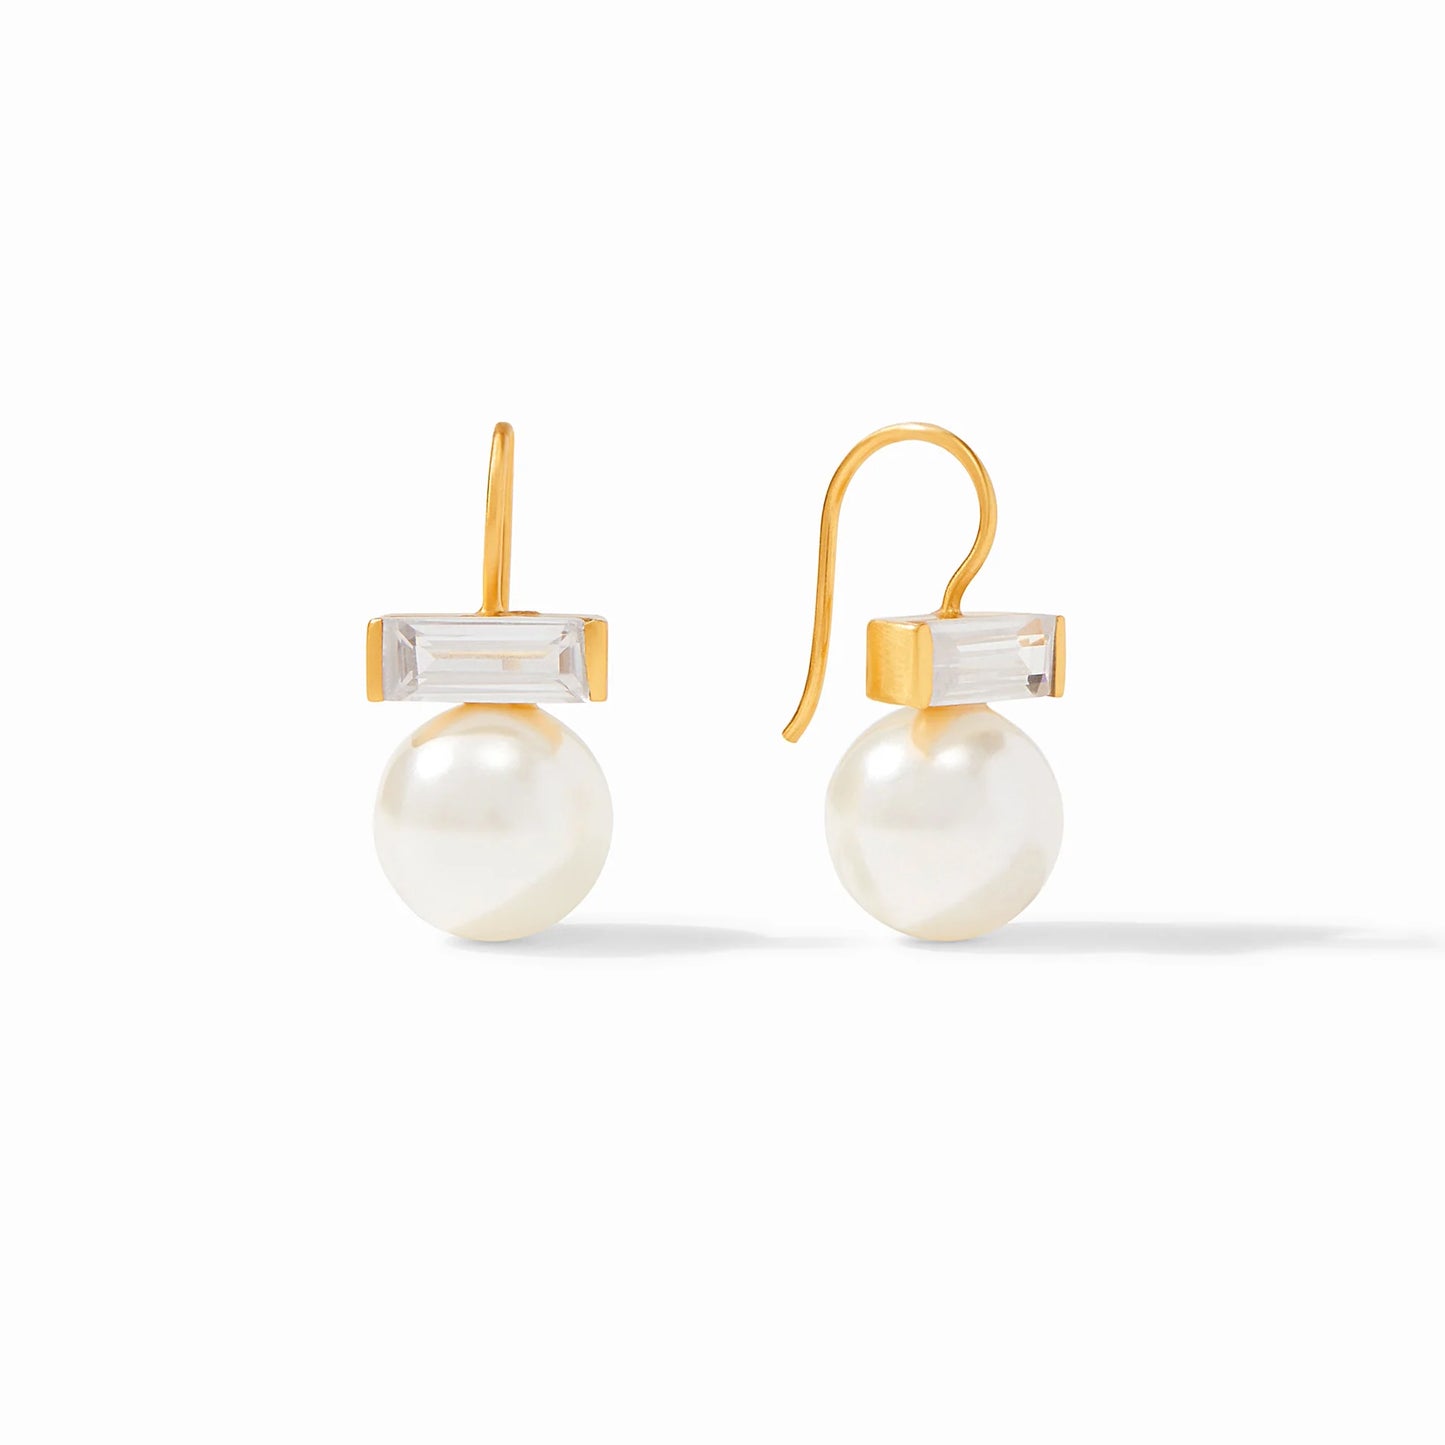 Charlotte Gold & Pearl Earring